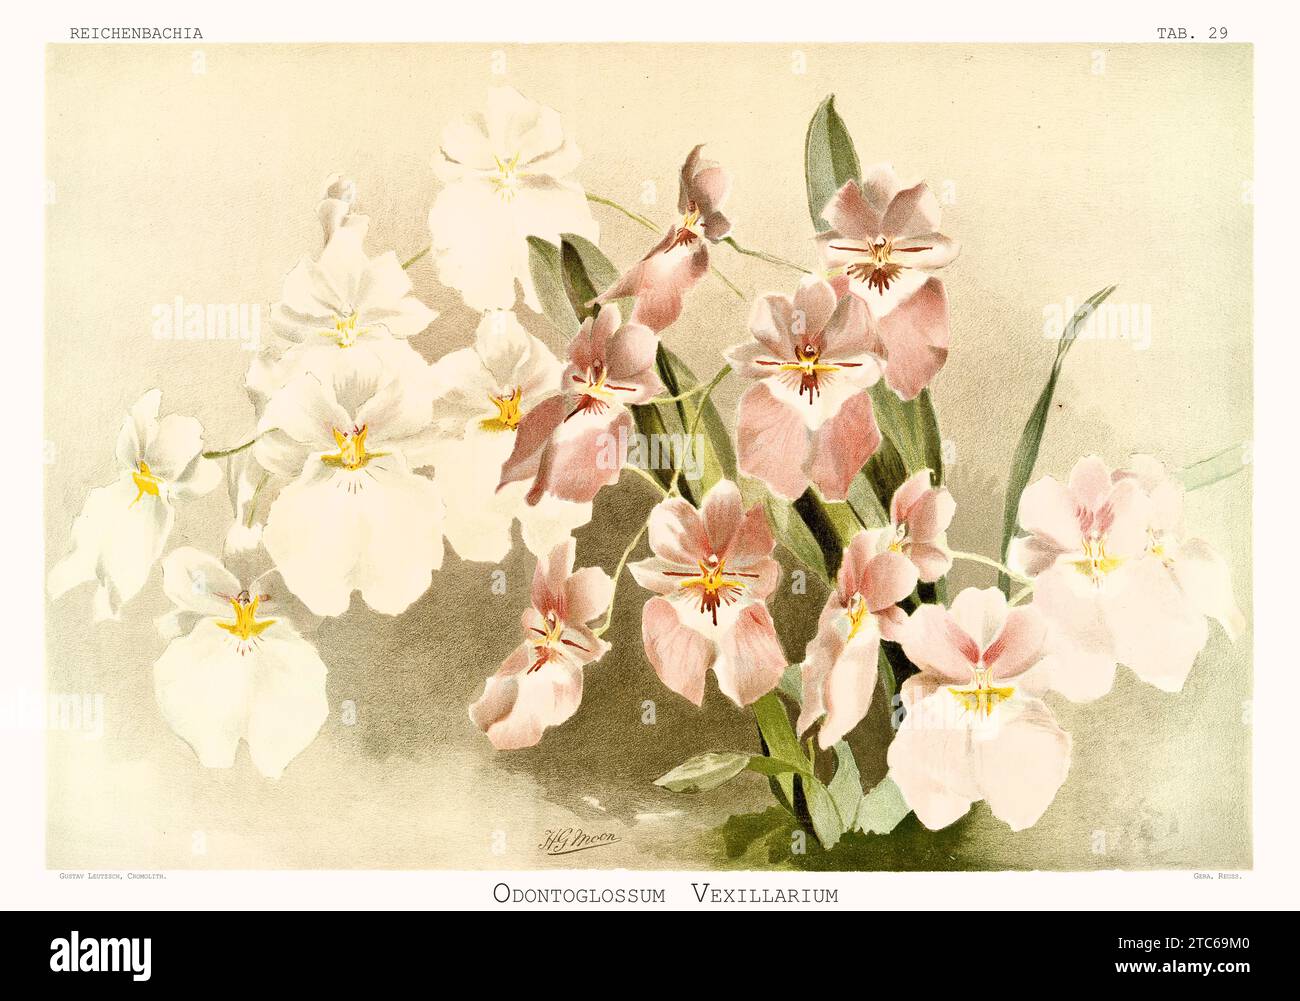 Old illustration of Flag-Like Miltoniopsis (Miltoniopsis vexillaria). Reichenbachia, by F. Sander. St. Albans, UK, 1888 - 1894 Stock Photo